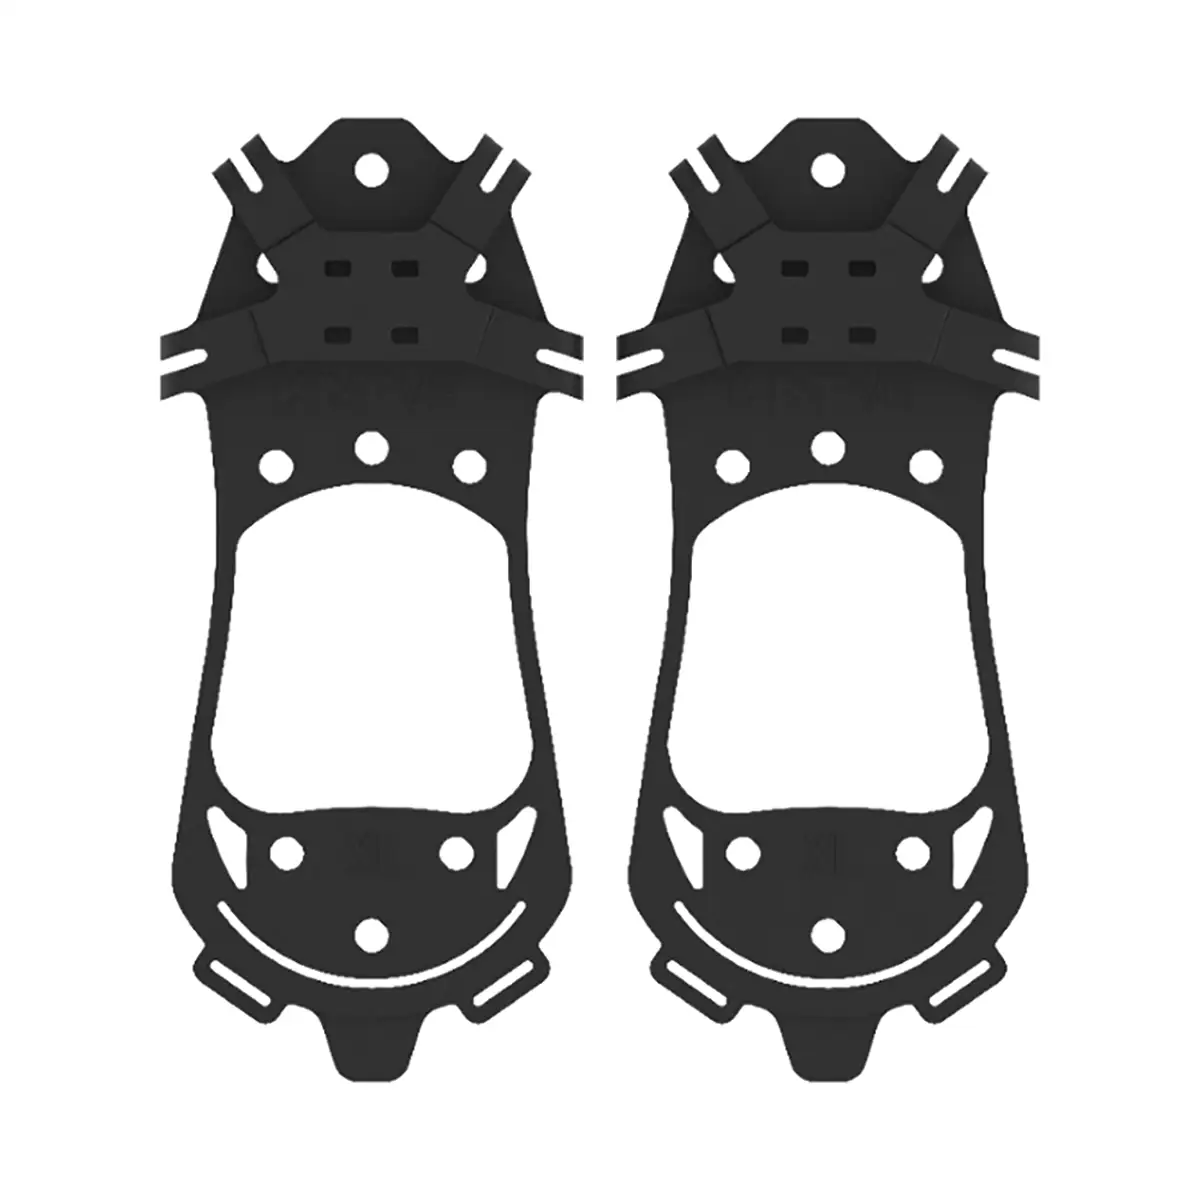 KAT Shoe Covers | for KAT VR Treadmills